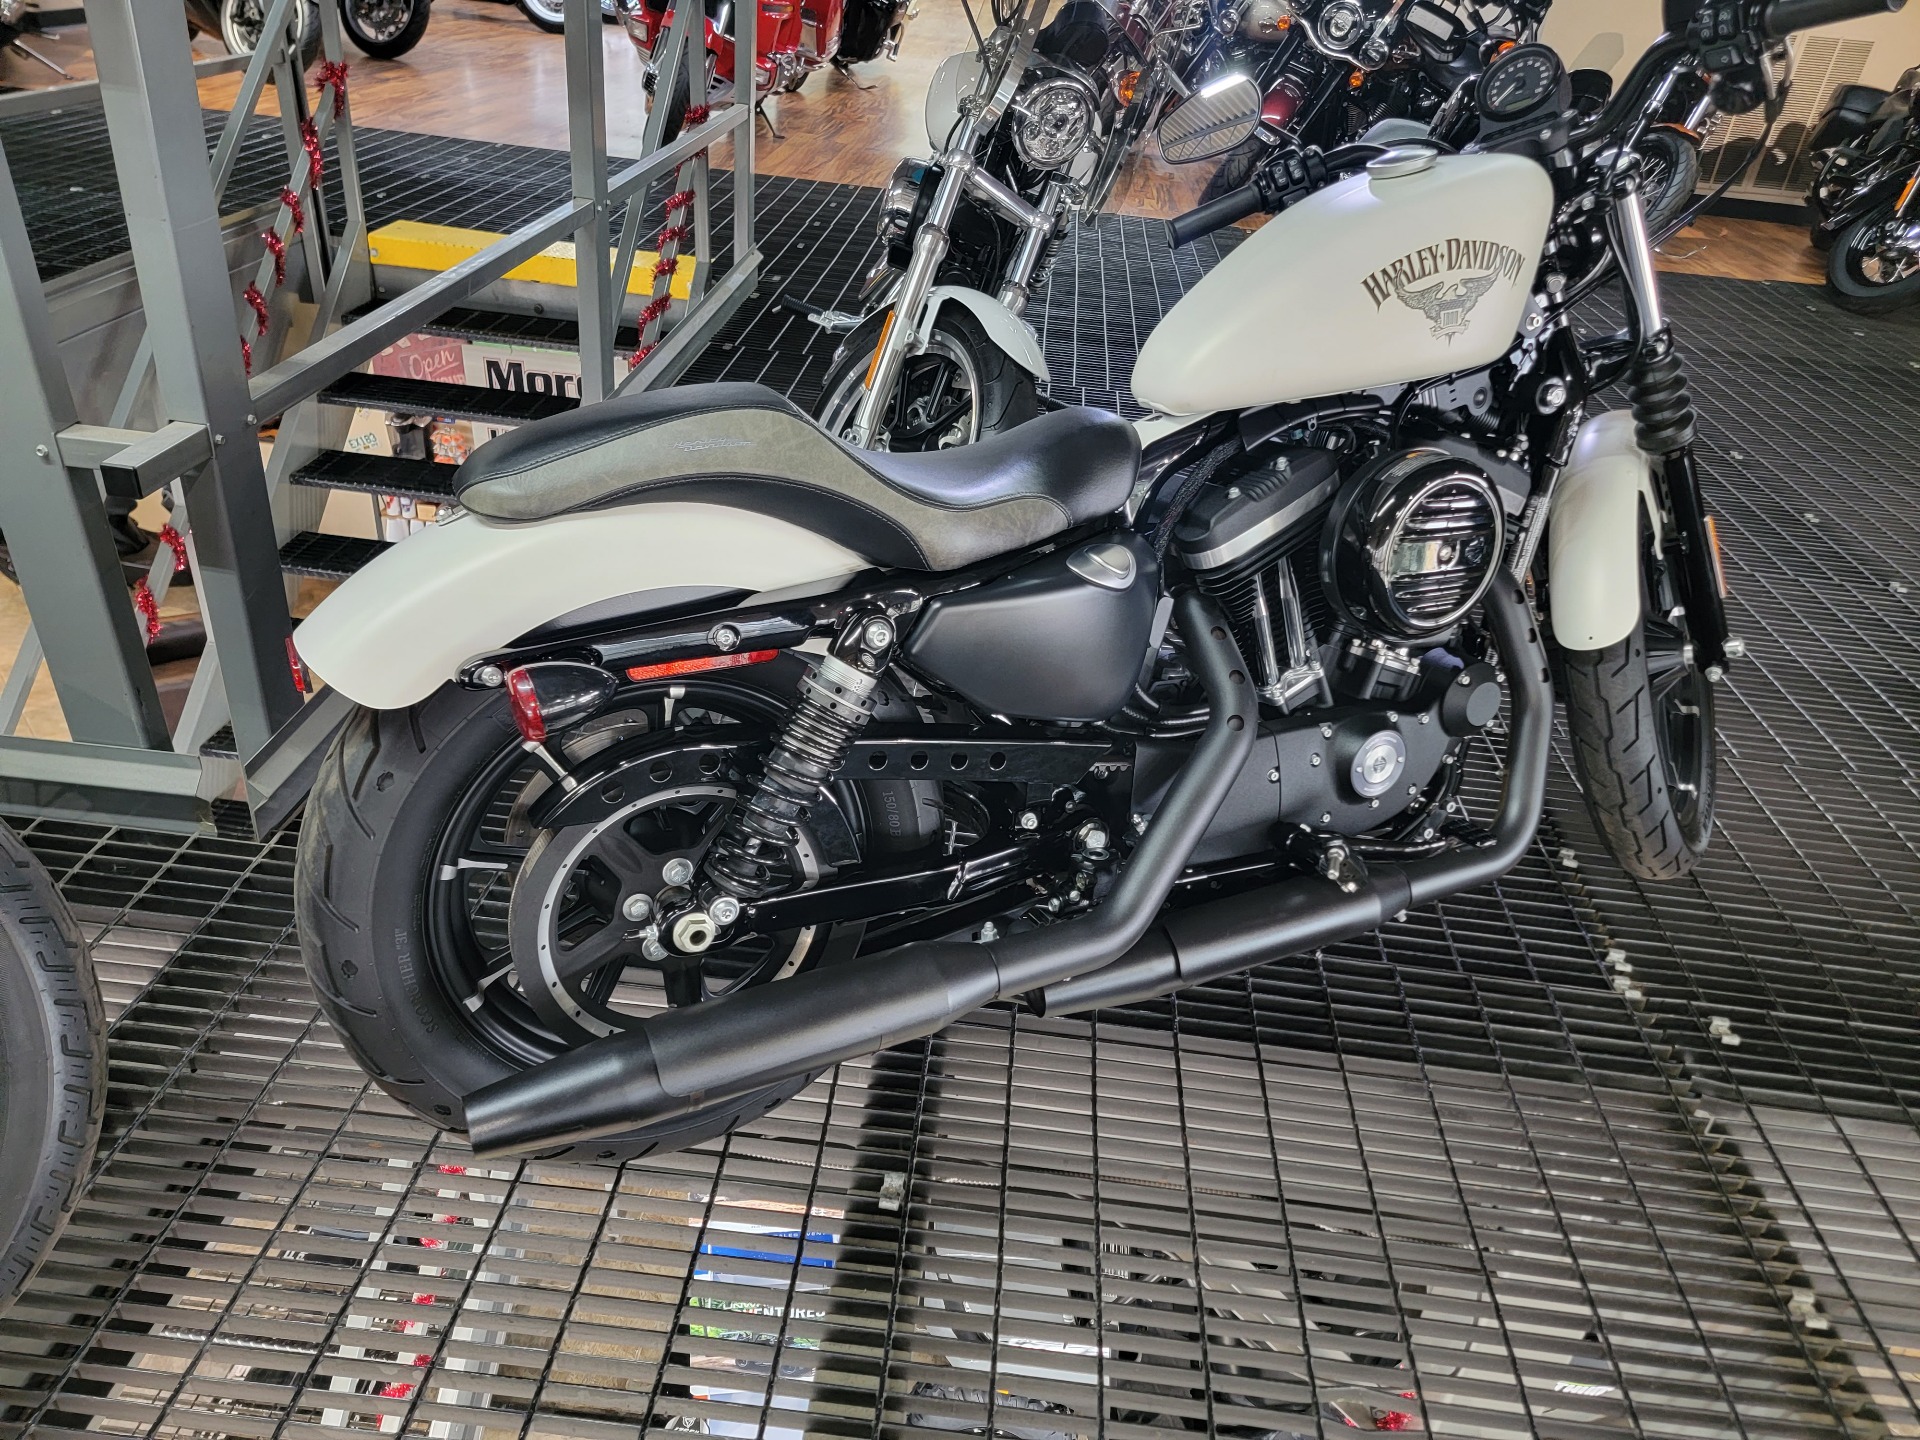 2018 Harley-Davidson Iron 883™ in Monroe, Michigan - Photo 2